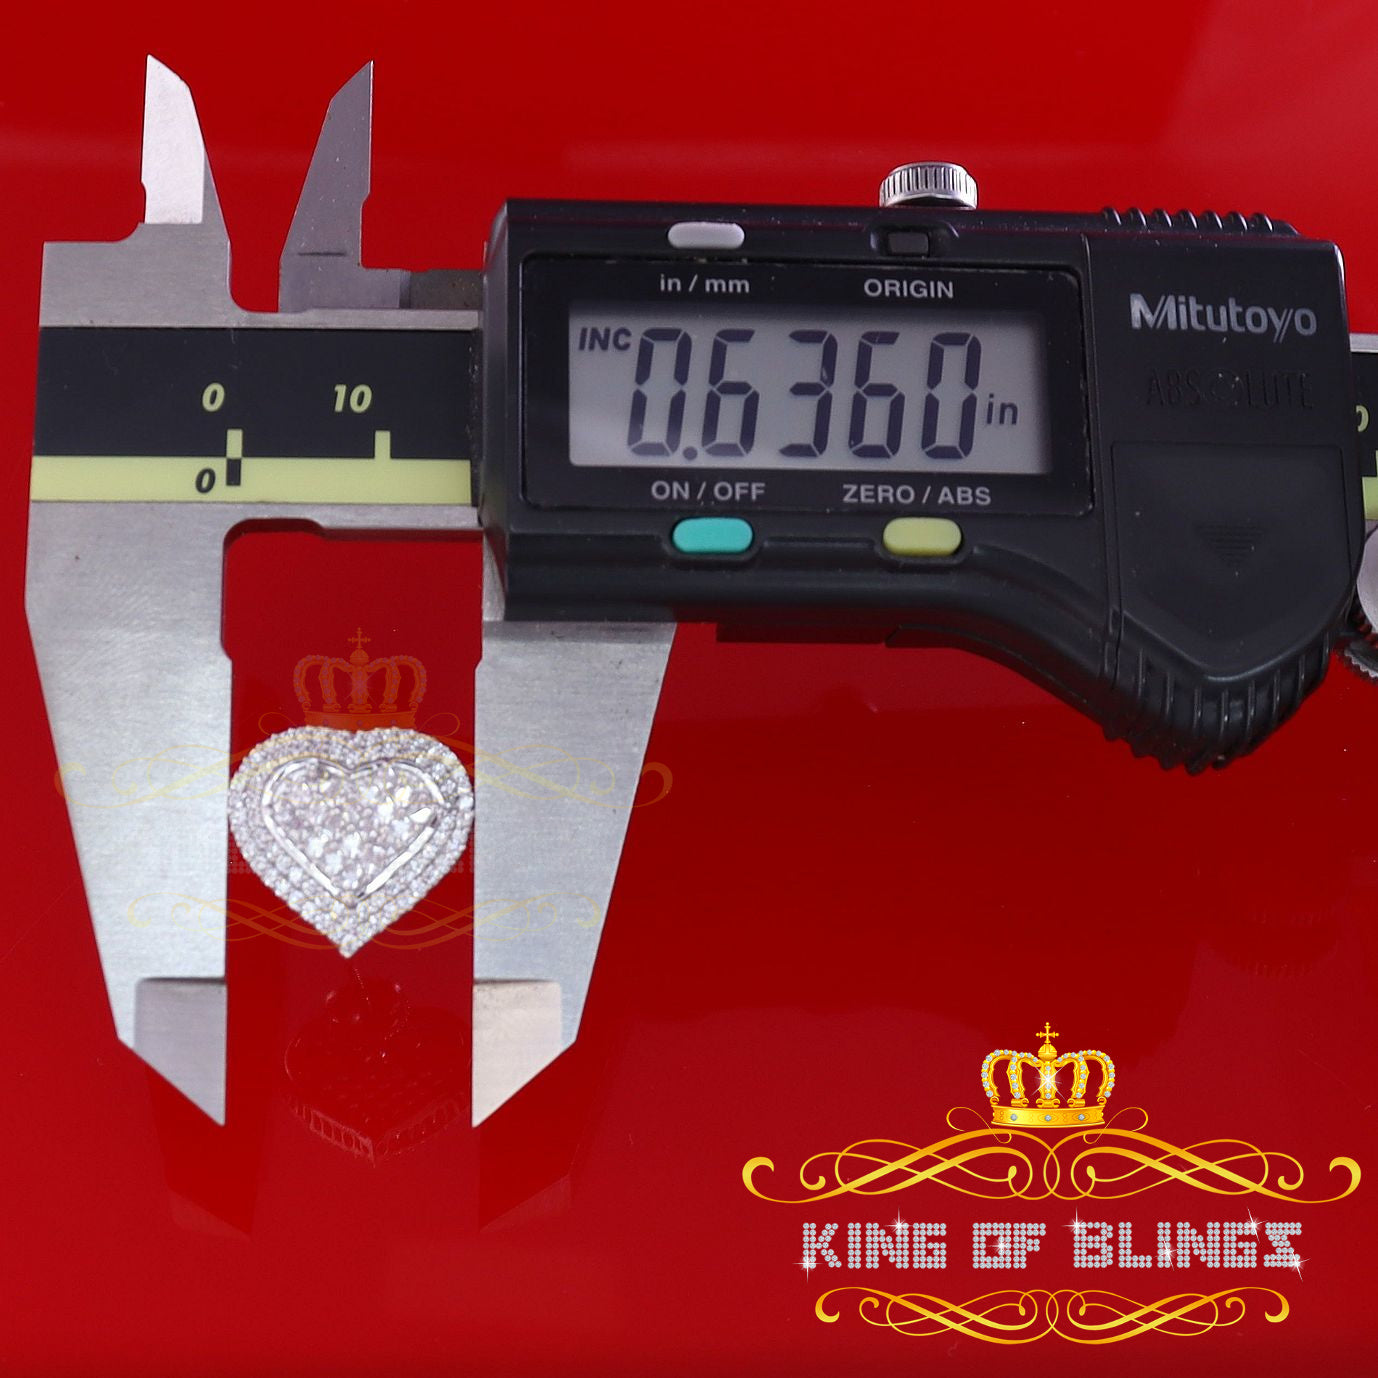 King of Blings- HIp Hop 925 White Sterling Silver 1.44ct Cubic Zirconia Heart Women's Earrings KING OF BLINGS